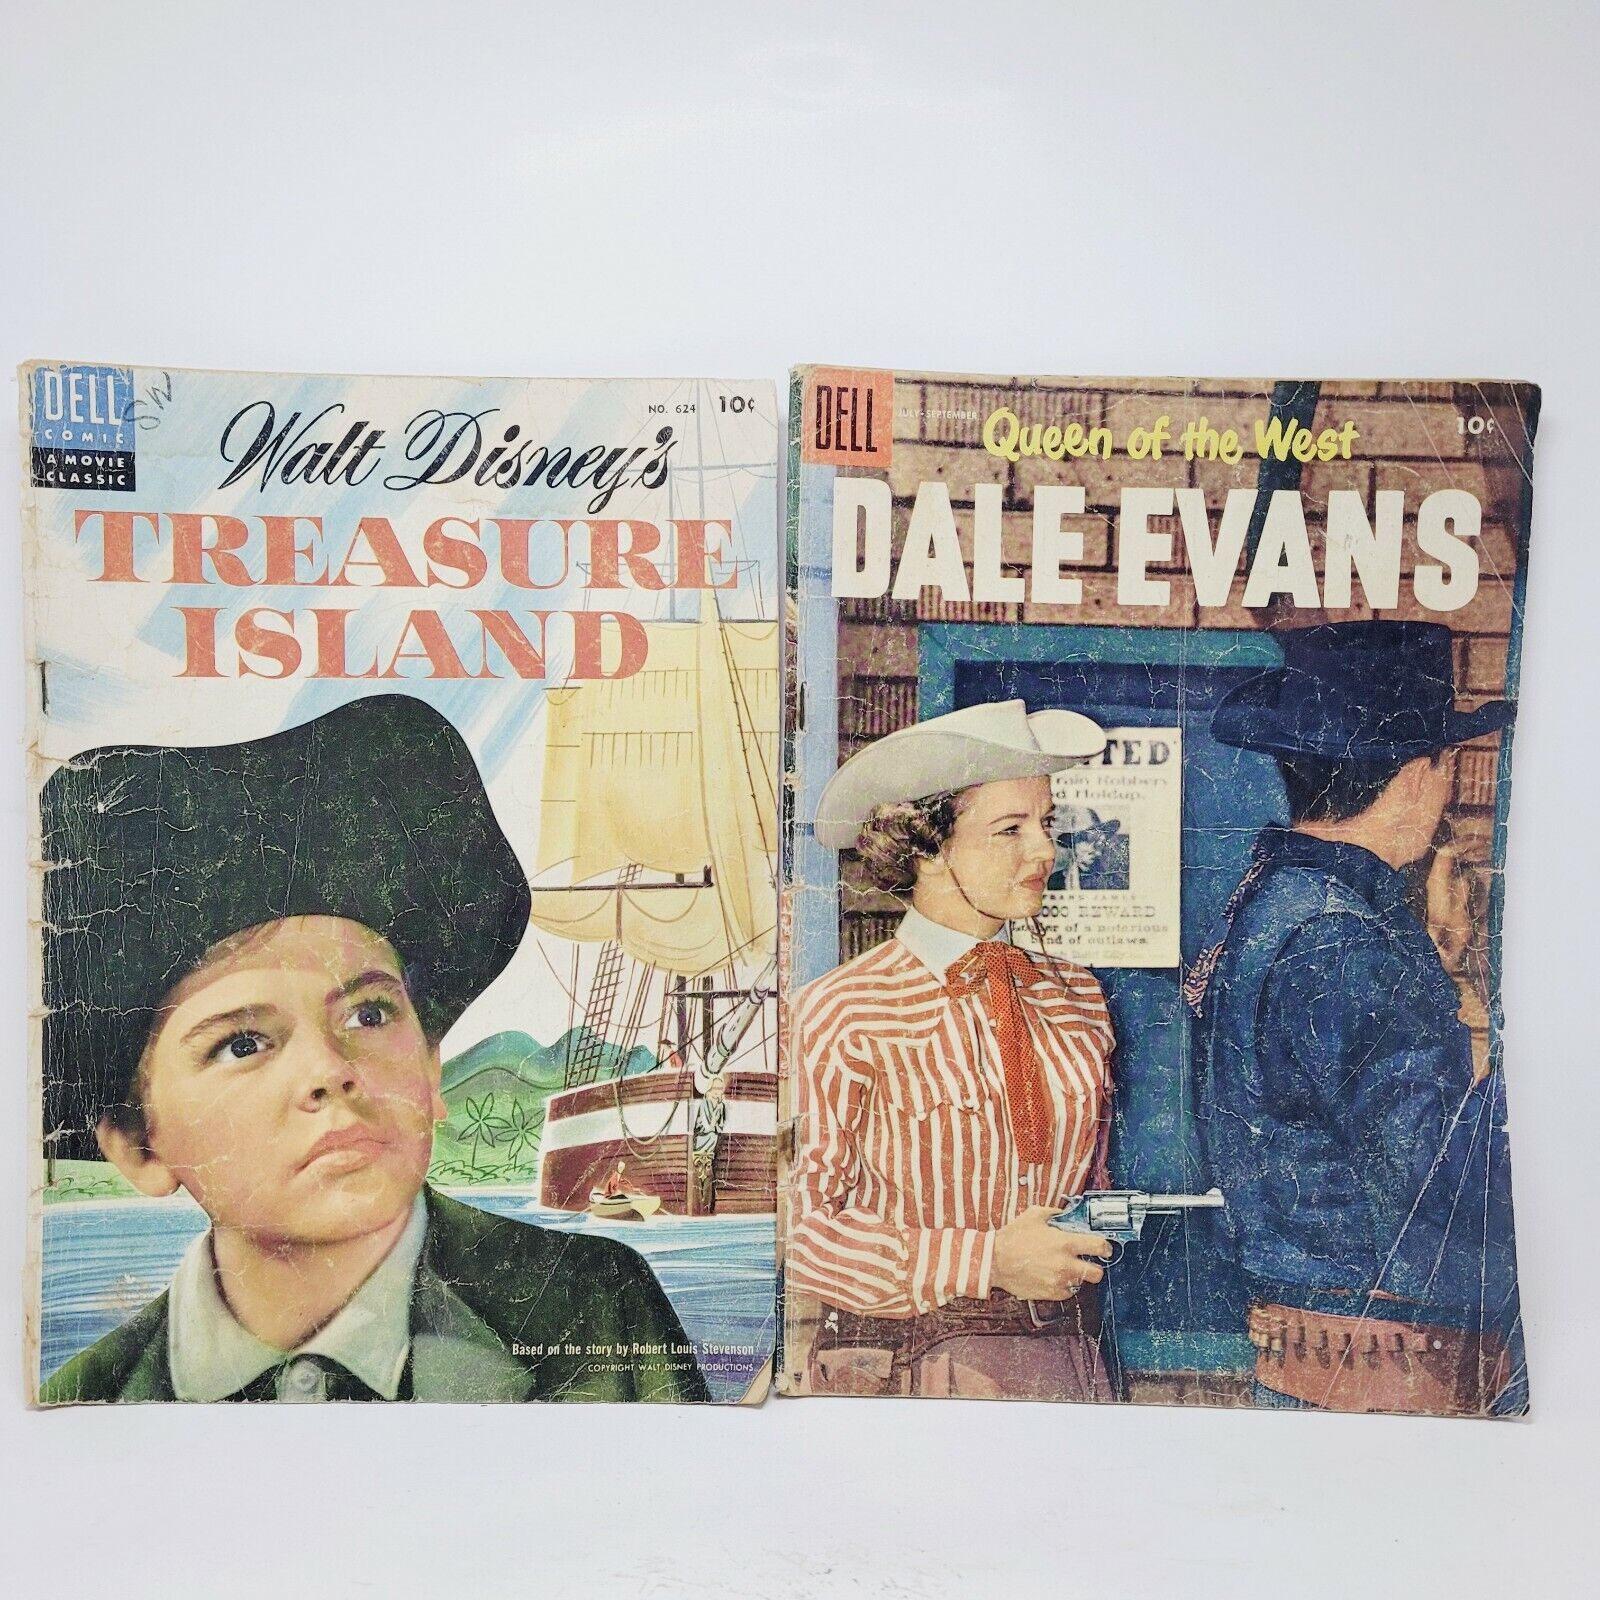 Queen Of The West Dale Evans No.8 1955 & Treasure Island Dell Comics No.624 1955